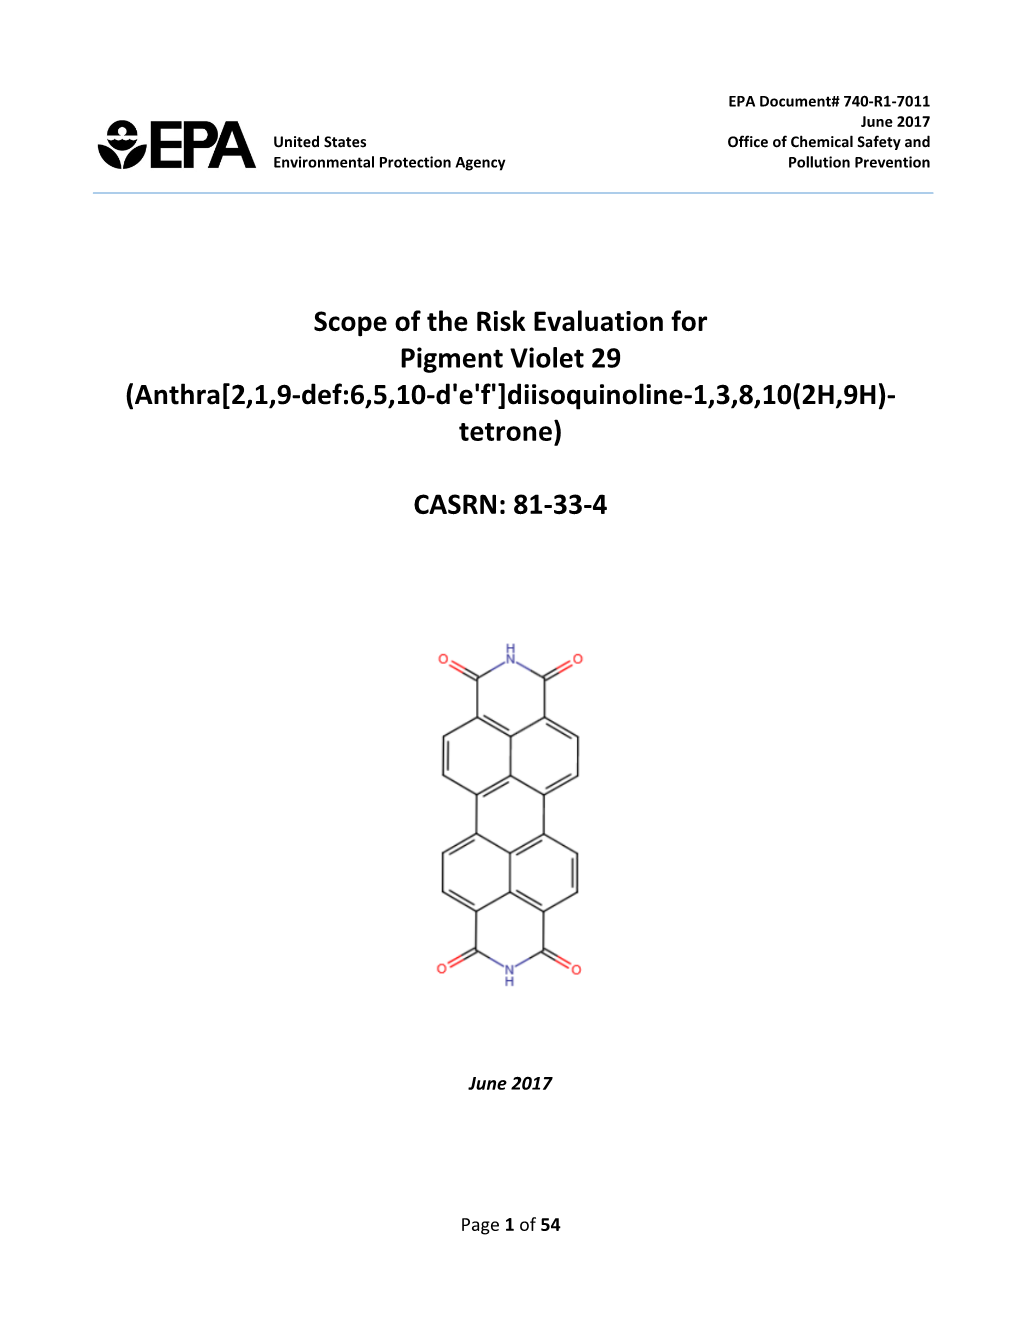 Scope of the Risk Evaluation for Pigment Violet 29 (Anthra[2,1,9-Def:6,5,10-D'e'f']Diisoquinoline-1,3,8,10(2H,9H)- Tetrone)